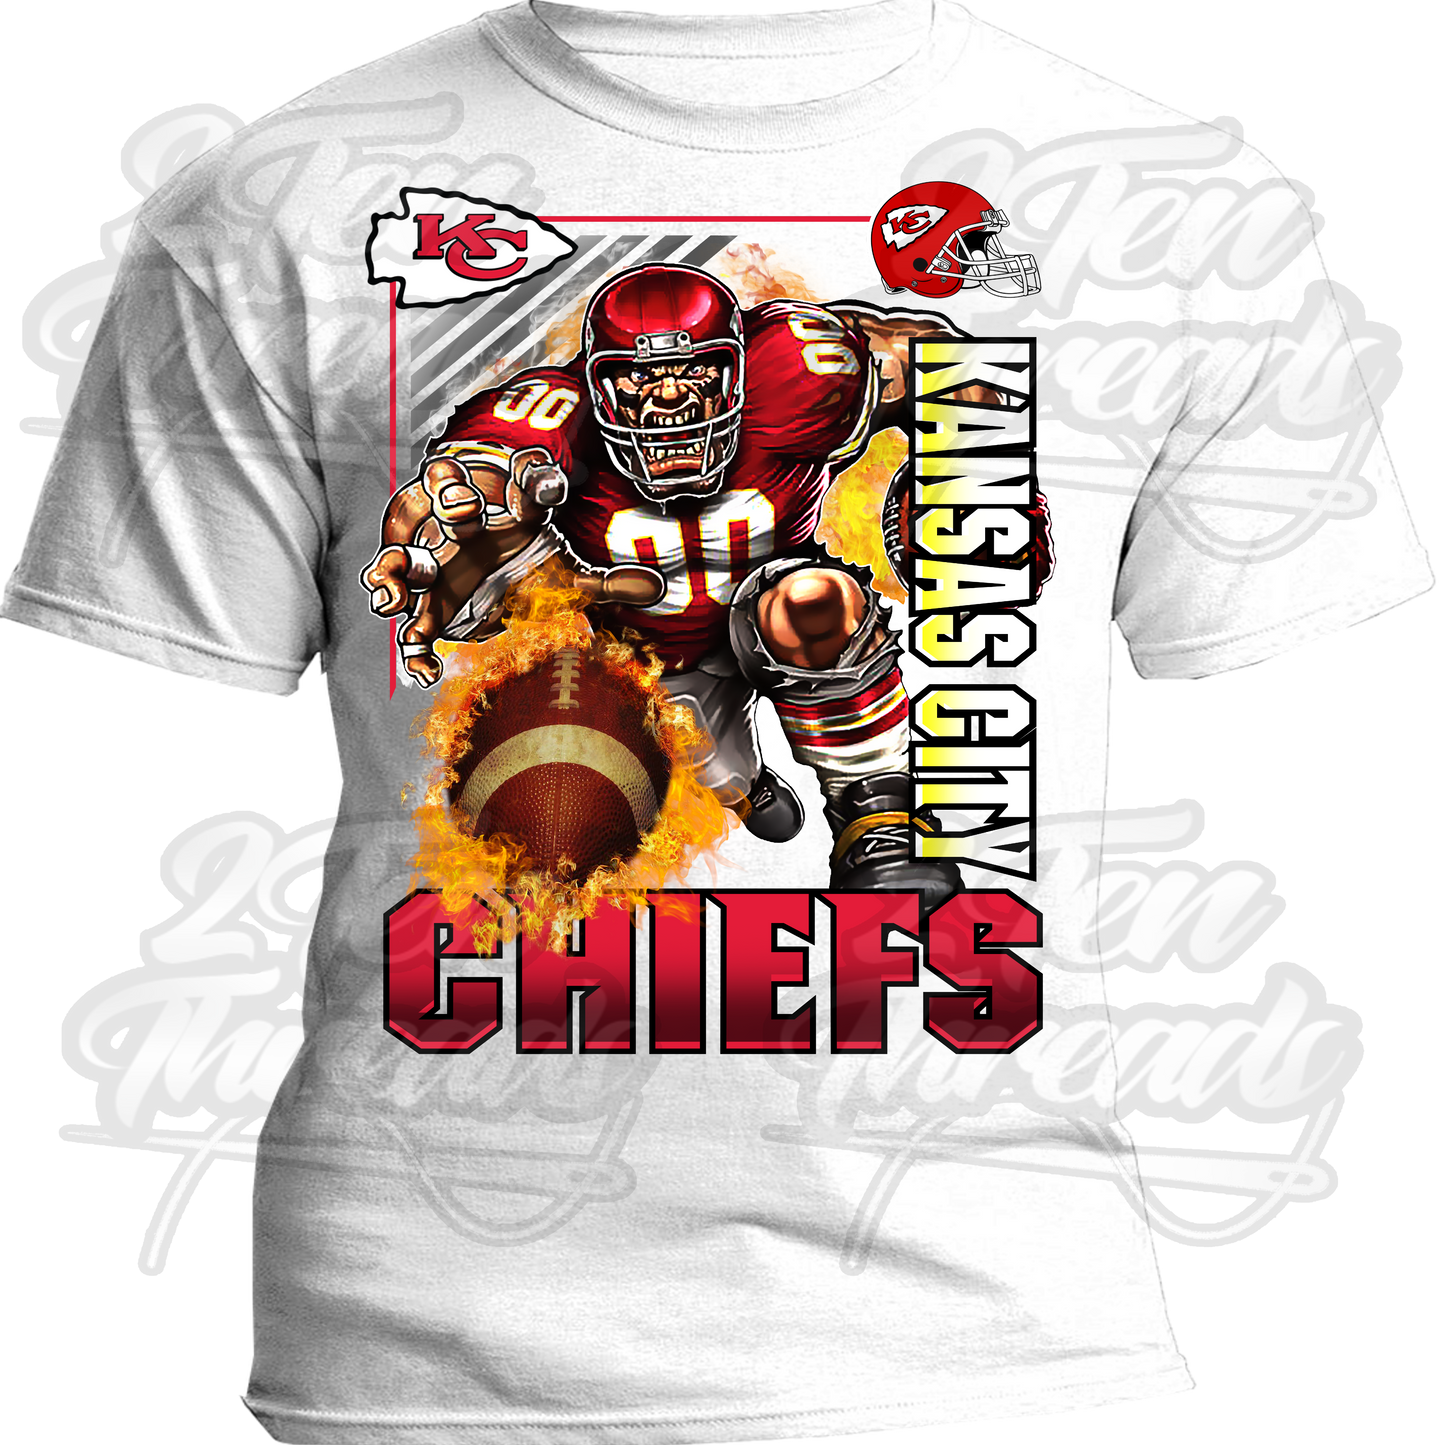 Kansas City Chiefs Shirt